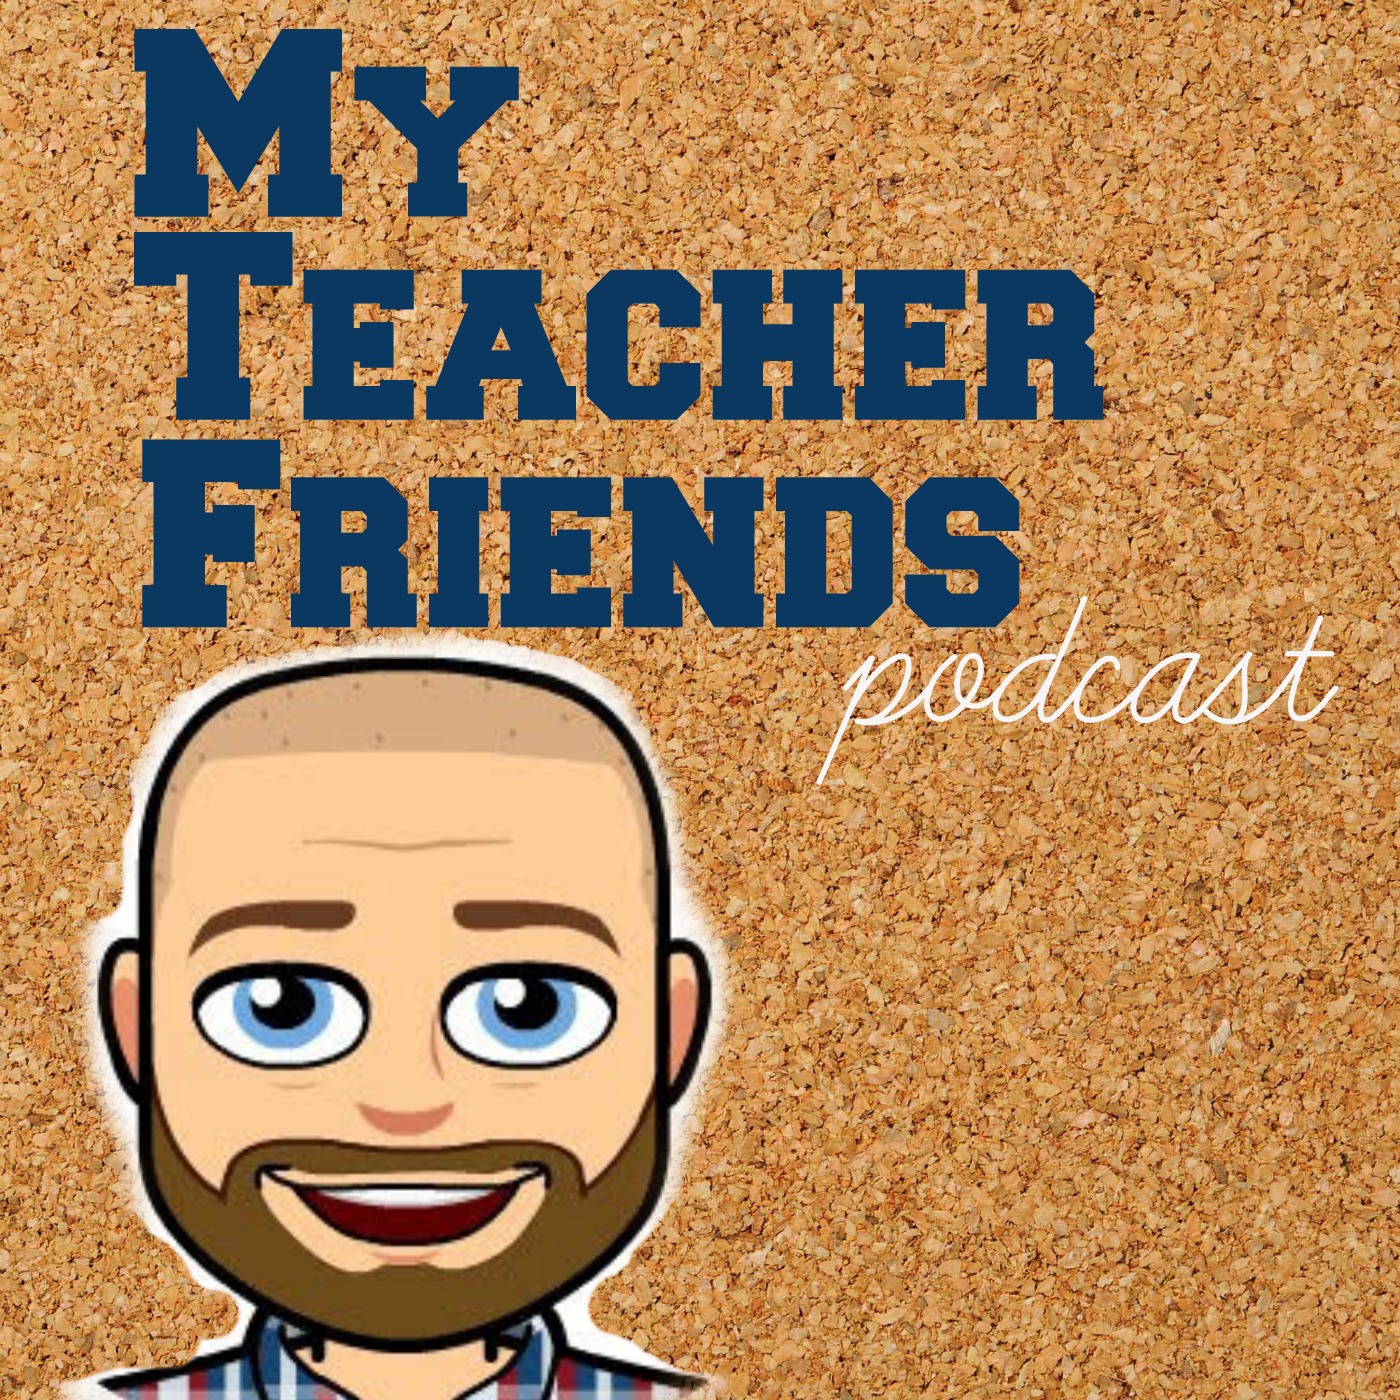 02 - My Teacher Friends Podcast - My Friend Elliott